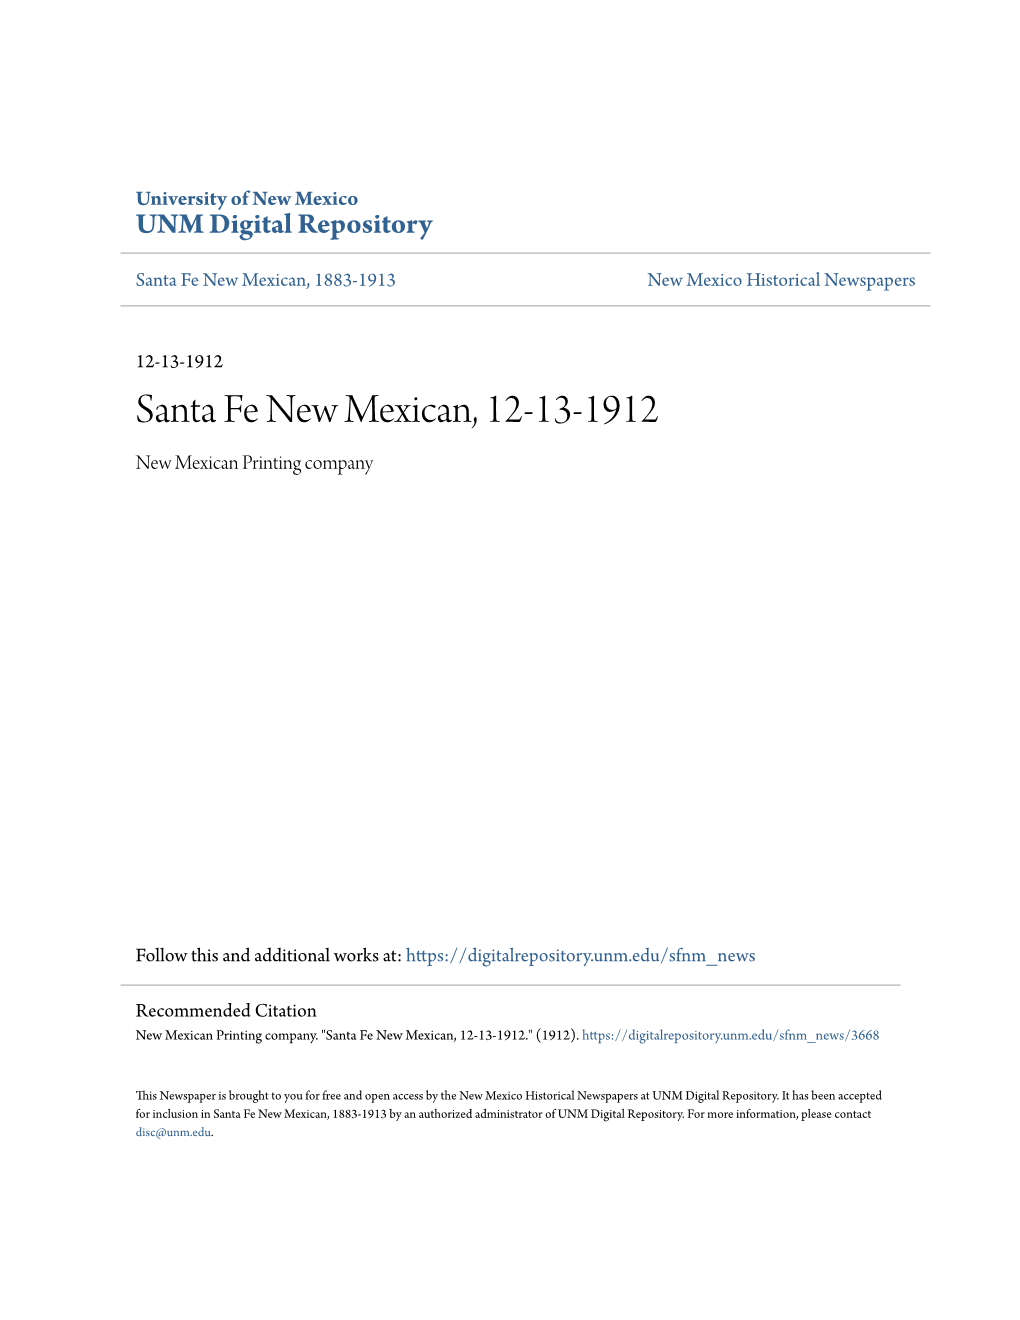 Santa Fe New Mexican, 12-13-1912 New Mexican Printing Company